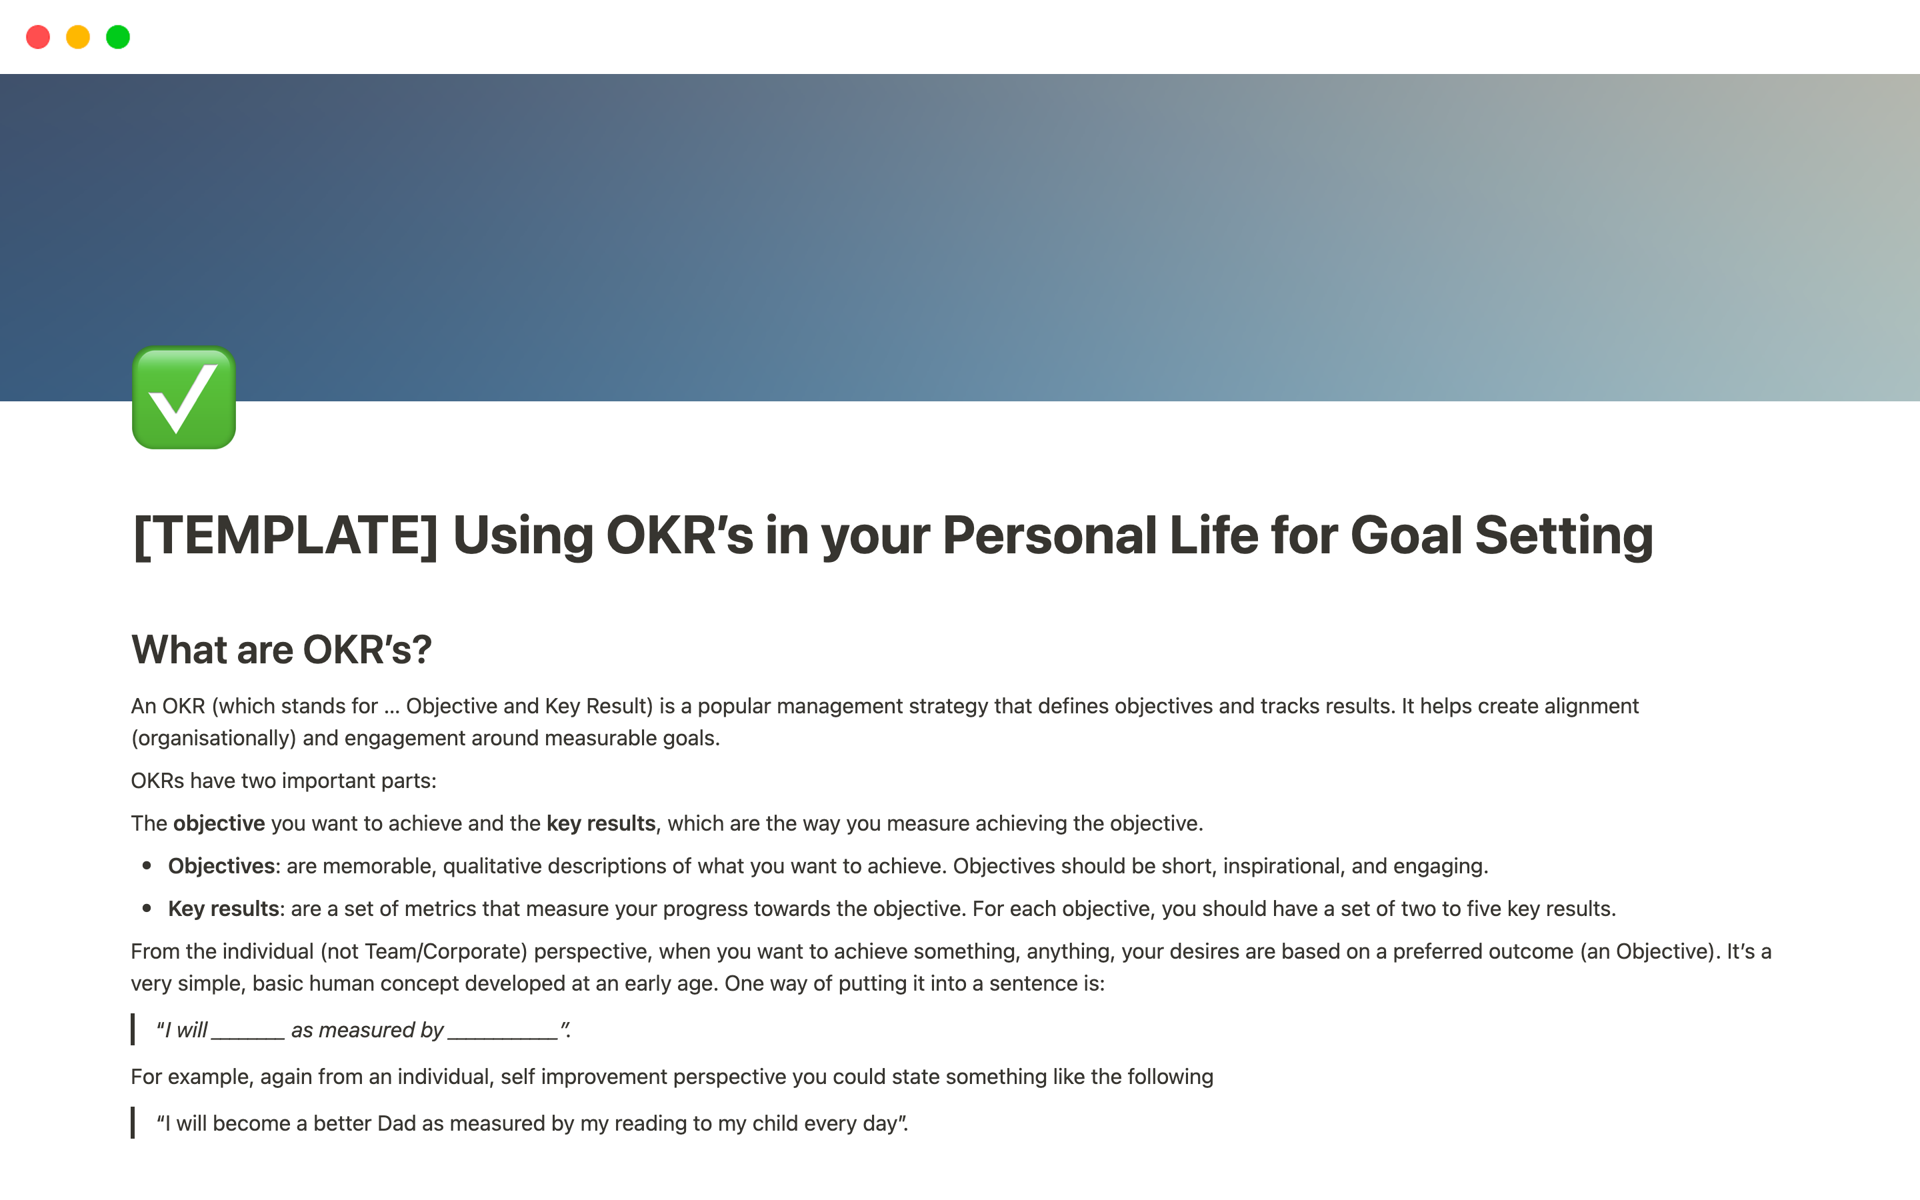 Using OKR’s for Personal Goal Setting님의 템플릿 미리보기